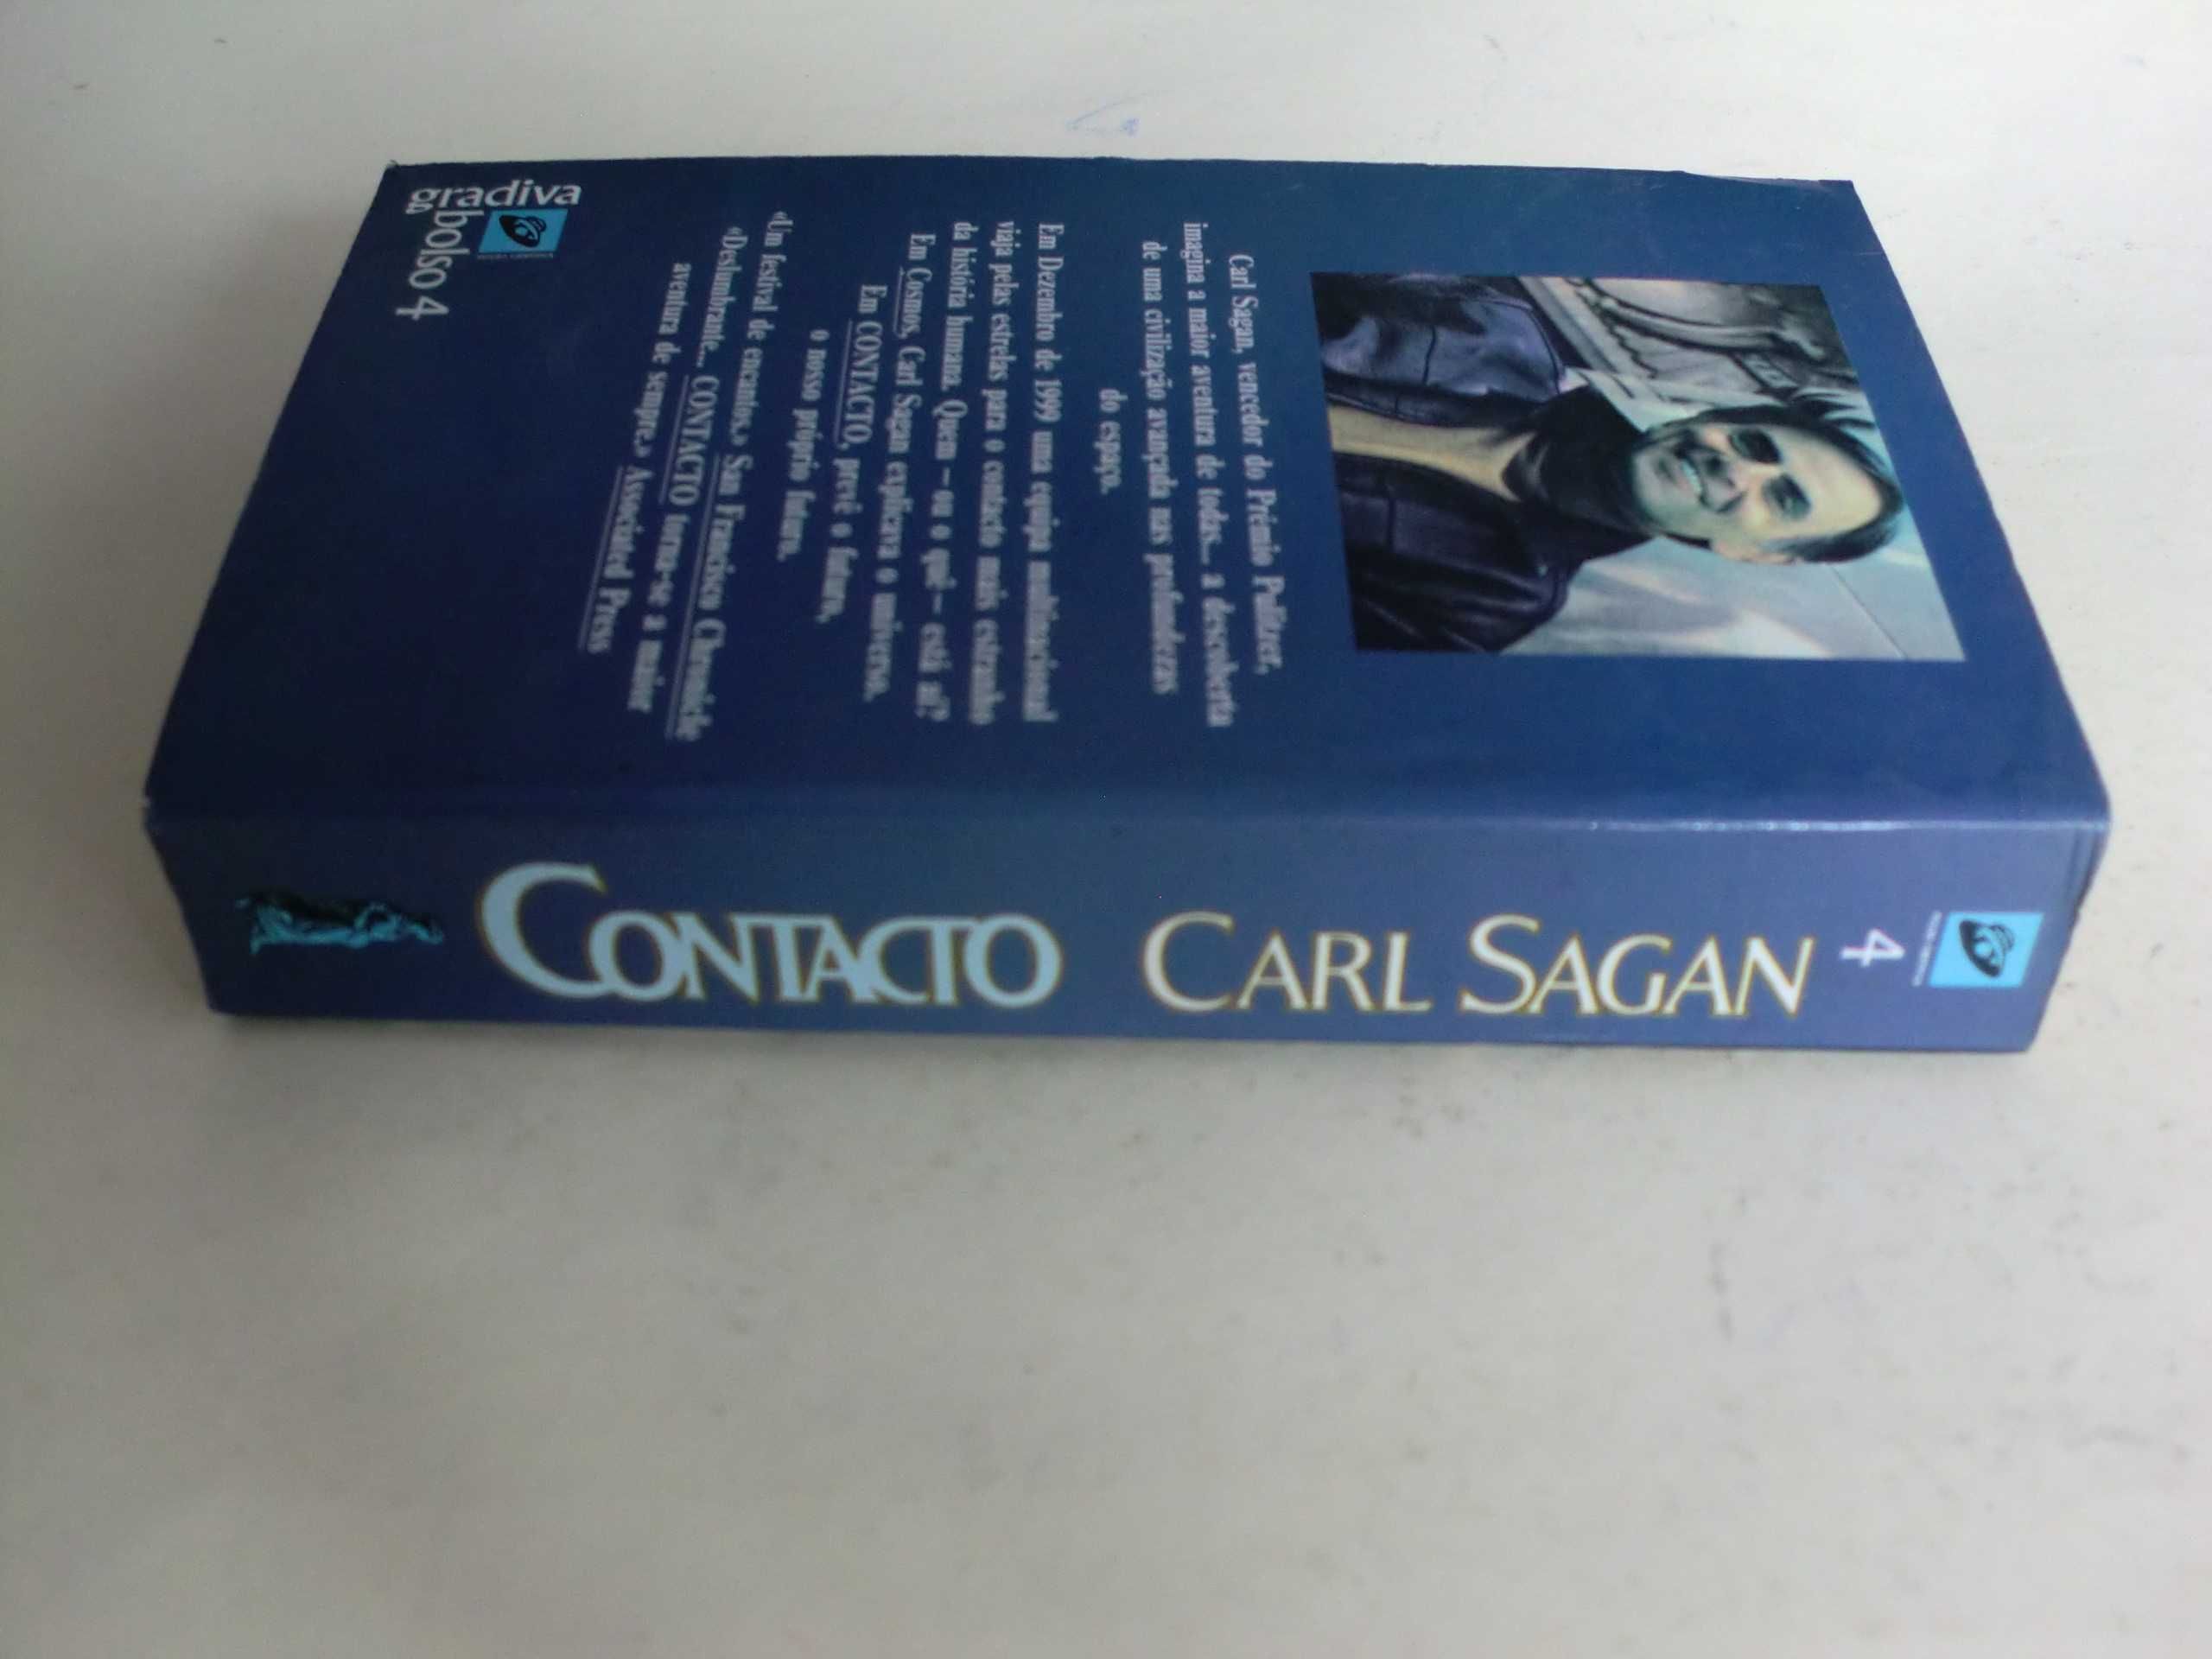 Contacto
de Carl Sagan